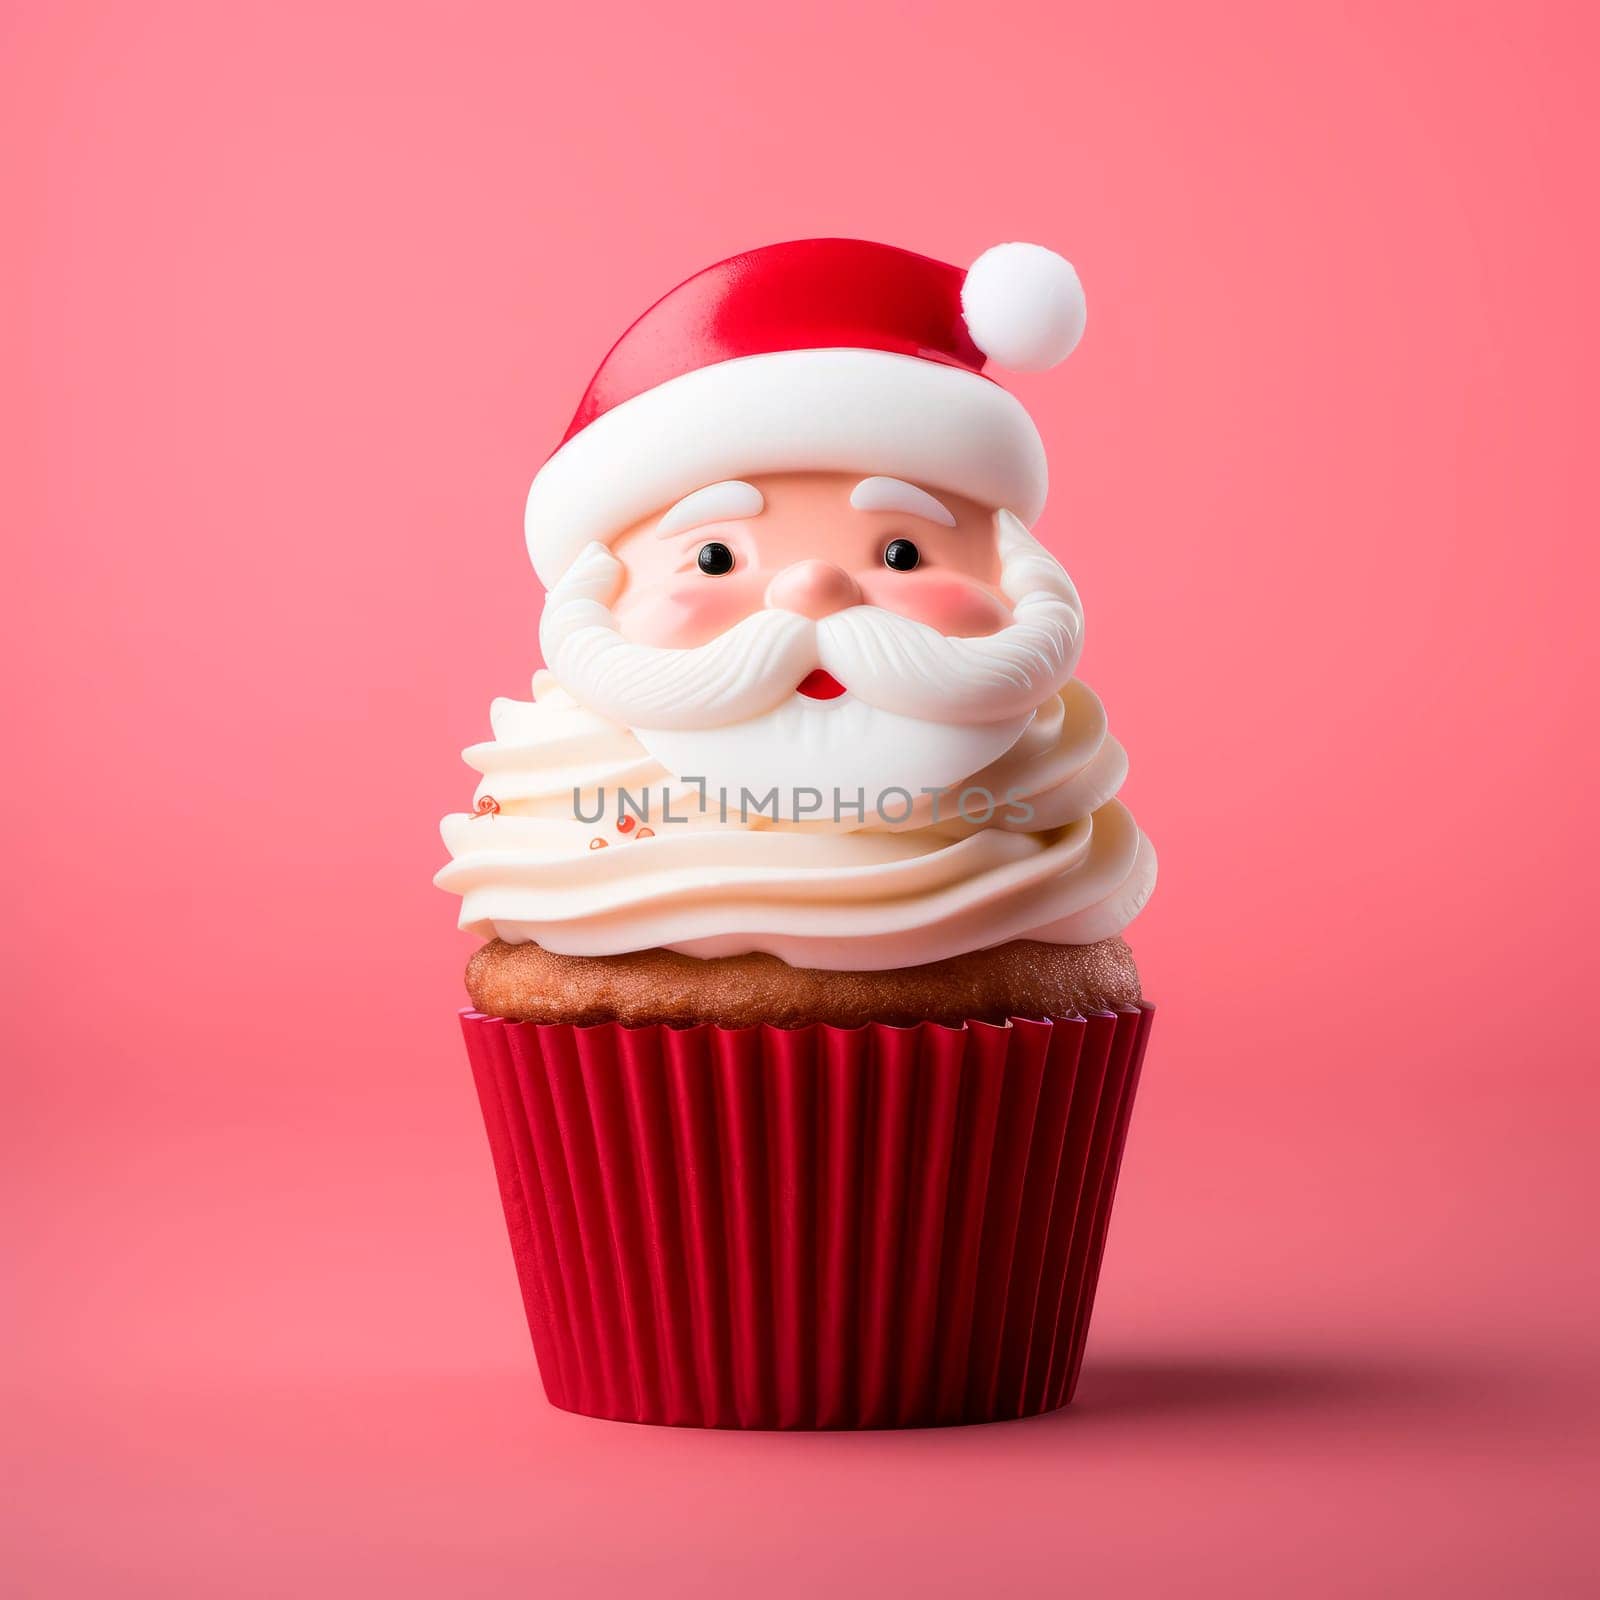 Christmas cupcake with Santa decoration by Spirina